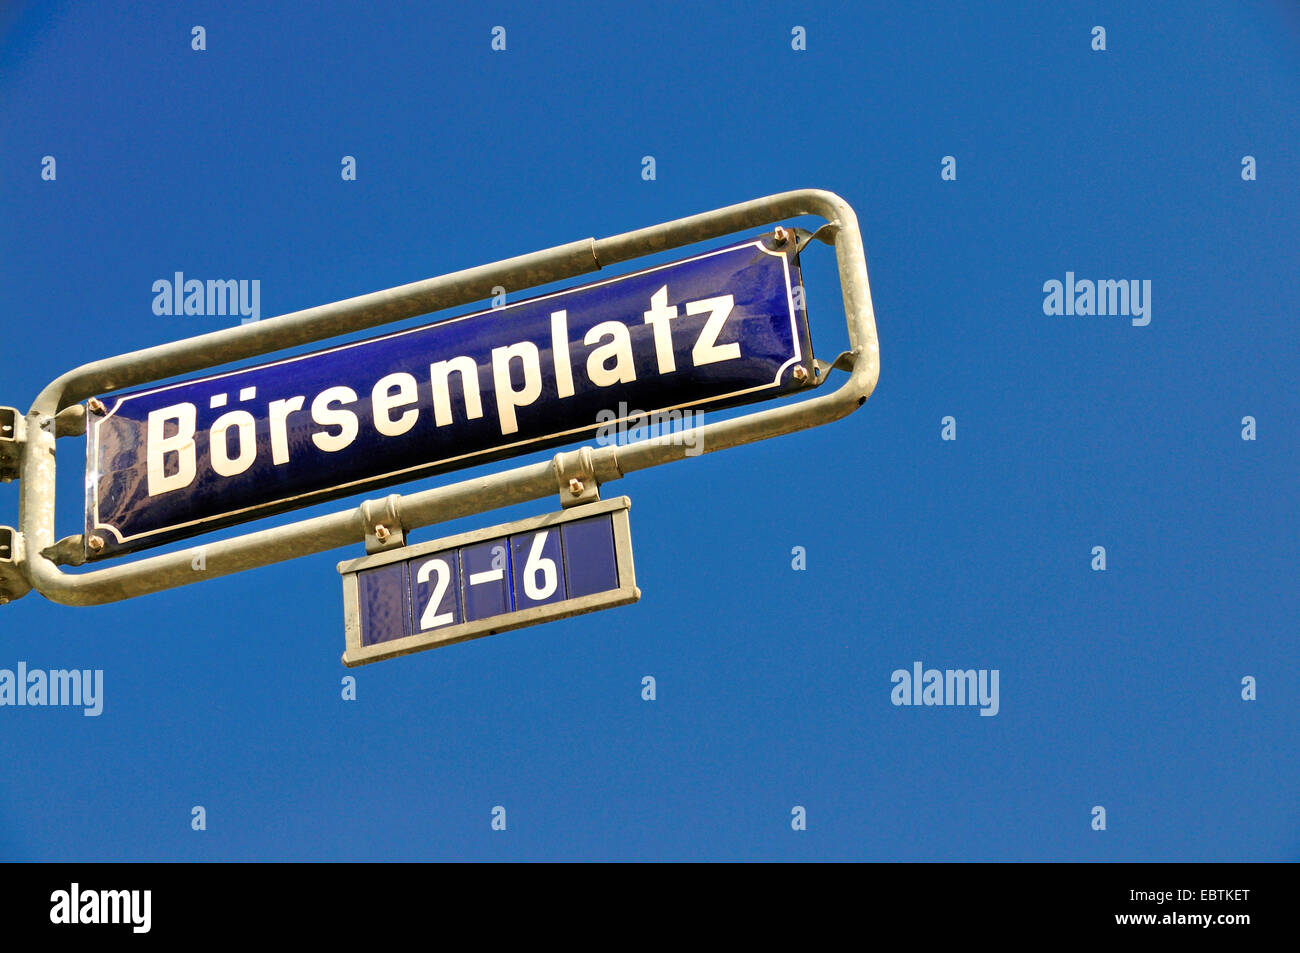 name plate Strassenschild Boersenplatz 2-6, street of stock exchange, in the financial district of Frankfurt/Main, Germany, Hesse, Frankfurt/Main Stock Photo